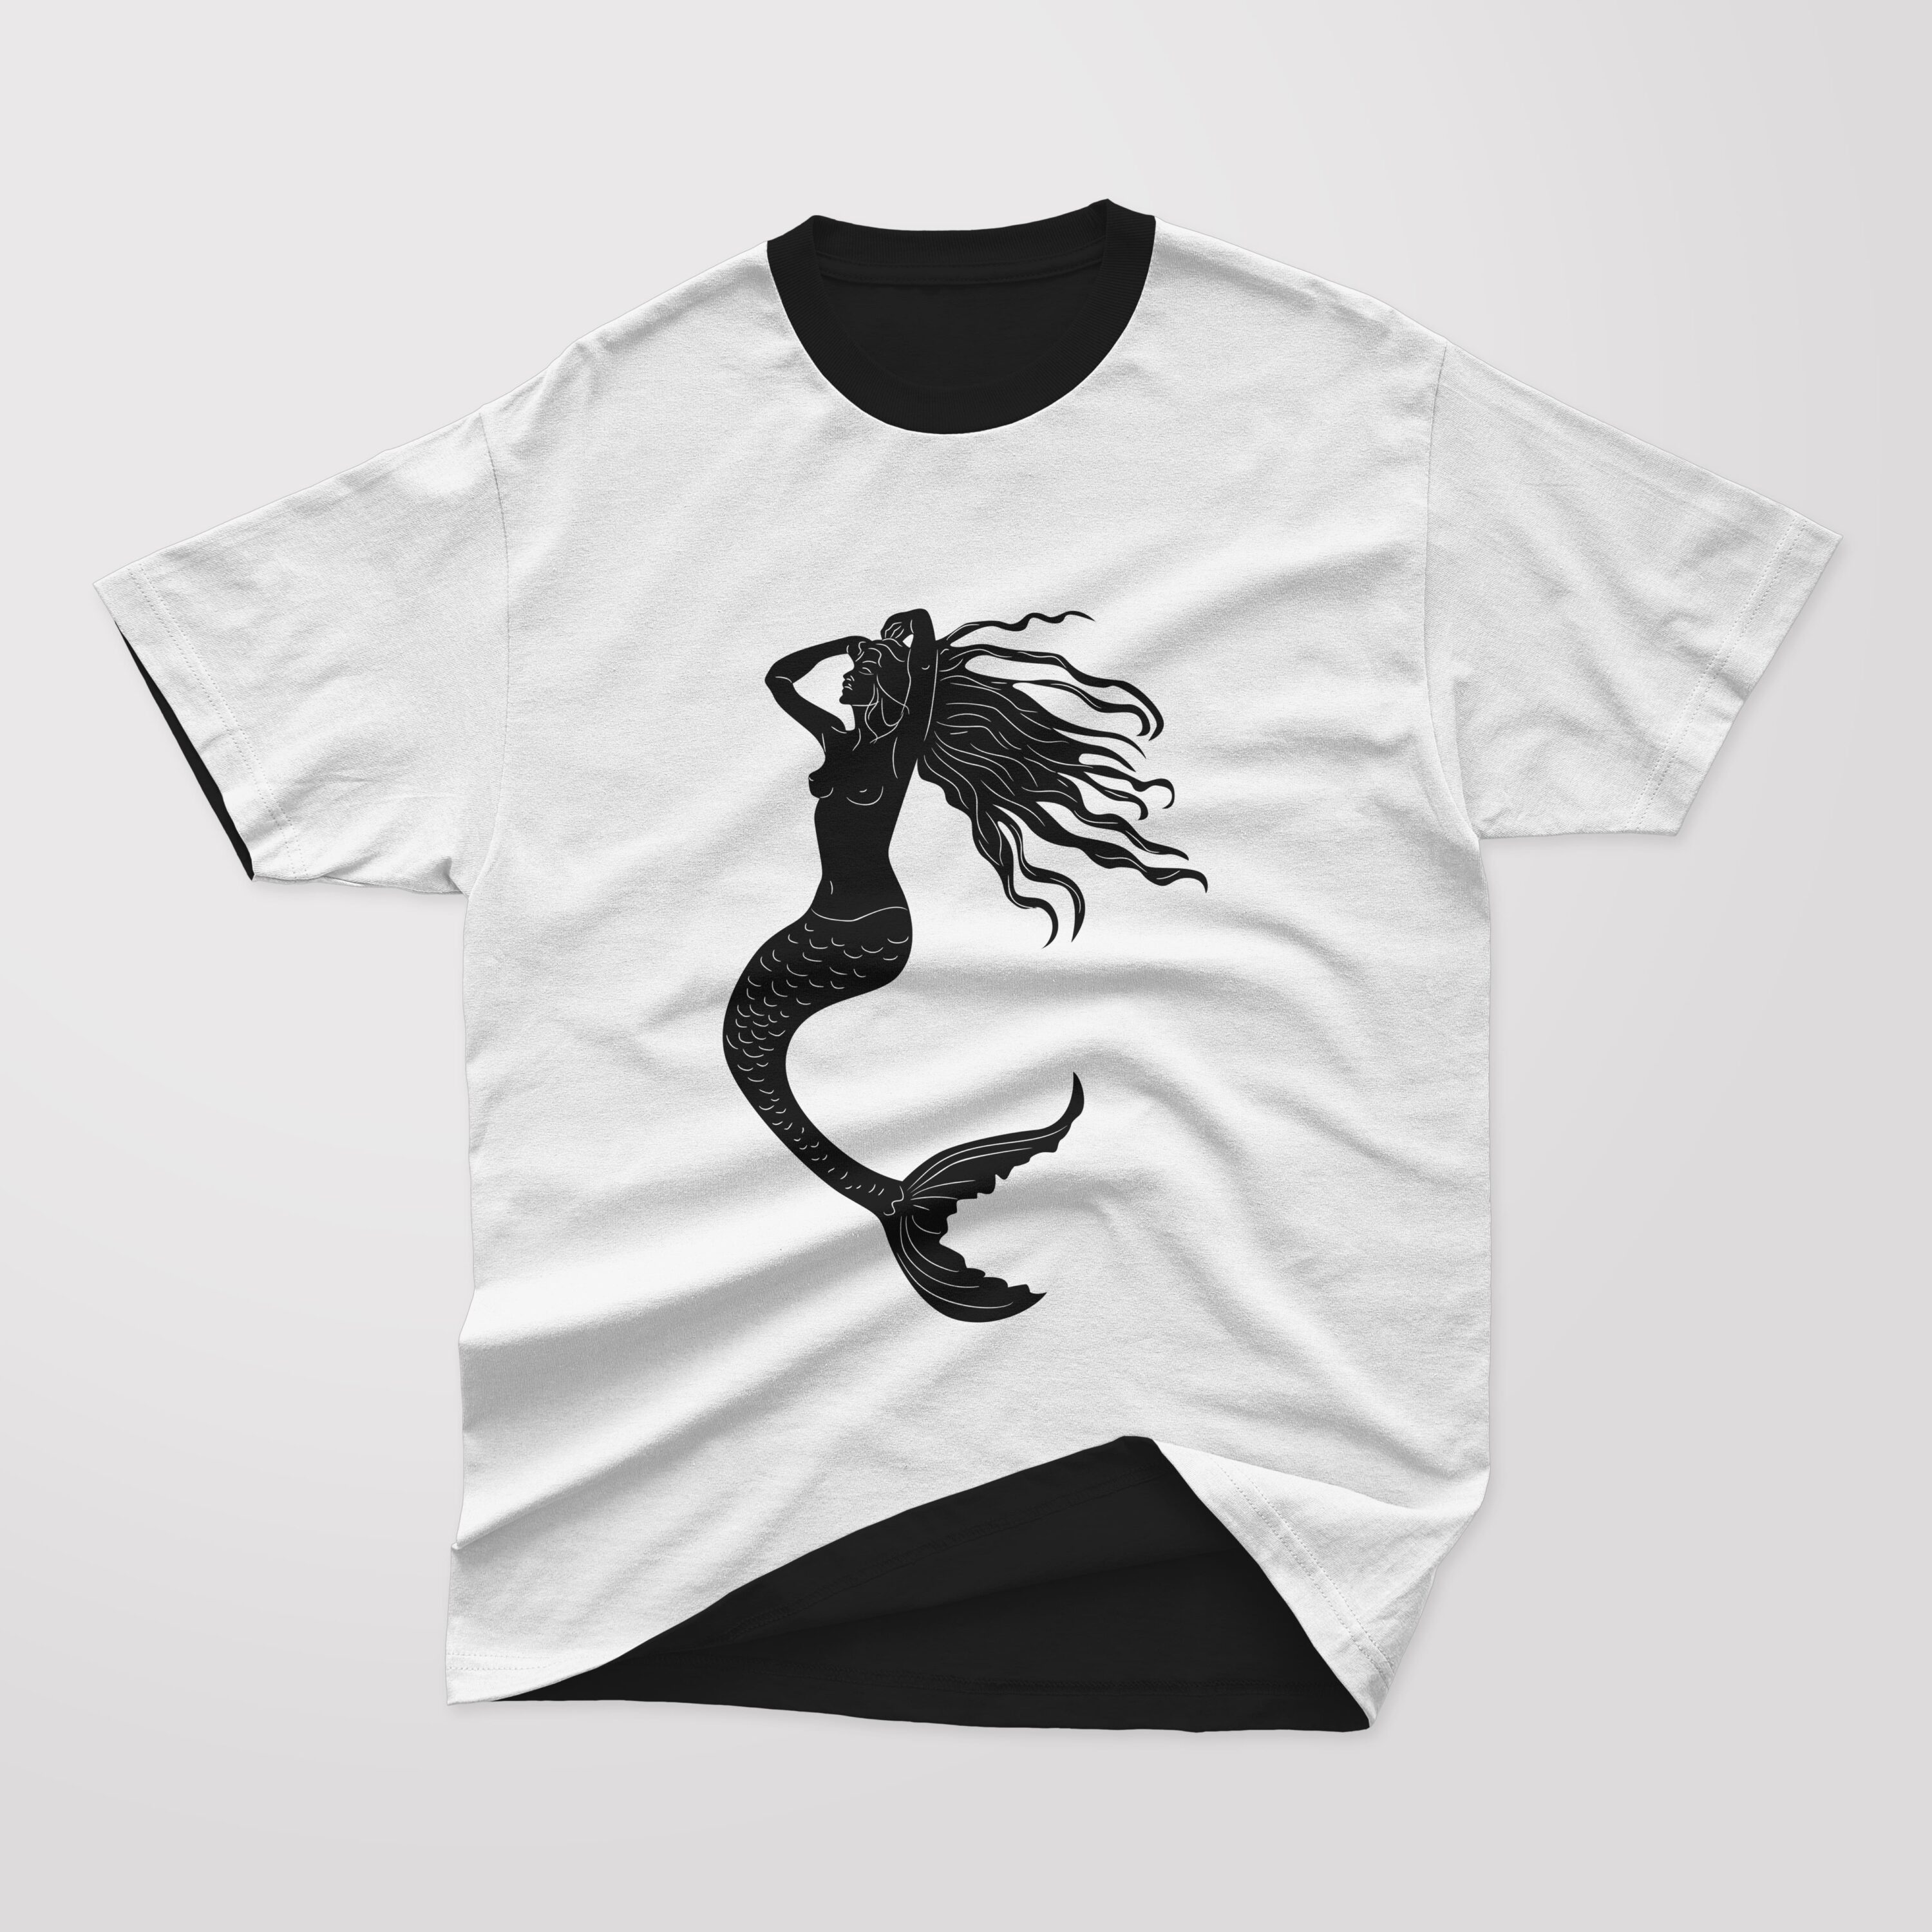 Beautiful mermaid for your t-shirt.